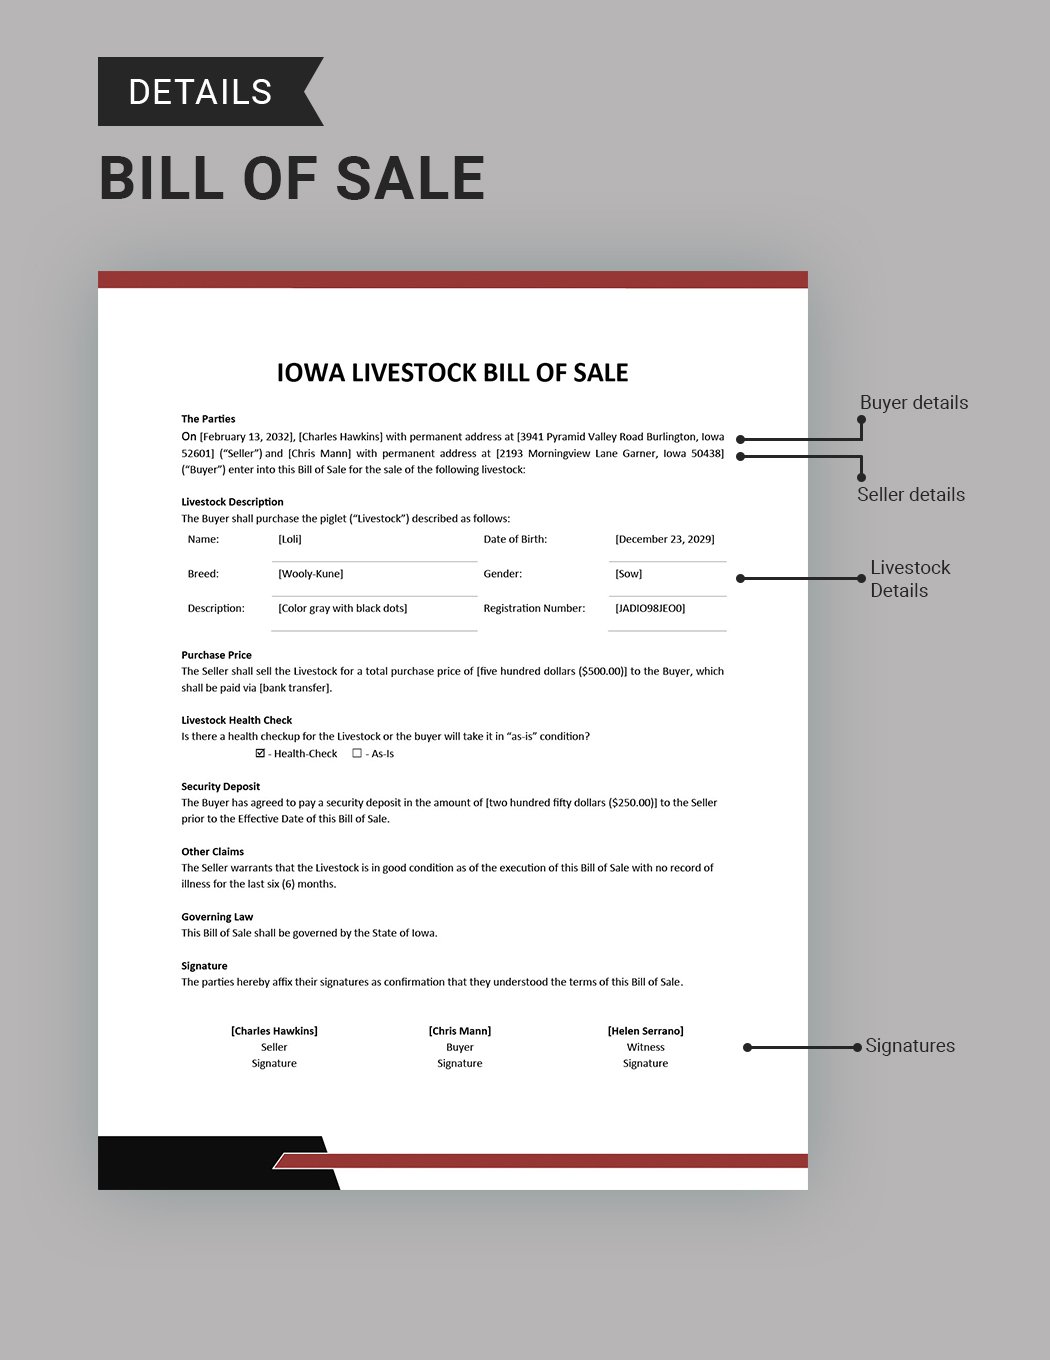 Iowa Livestock Bill of Sale Template